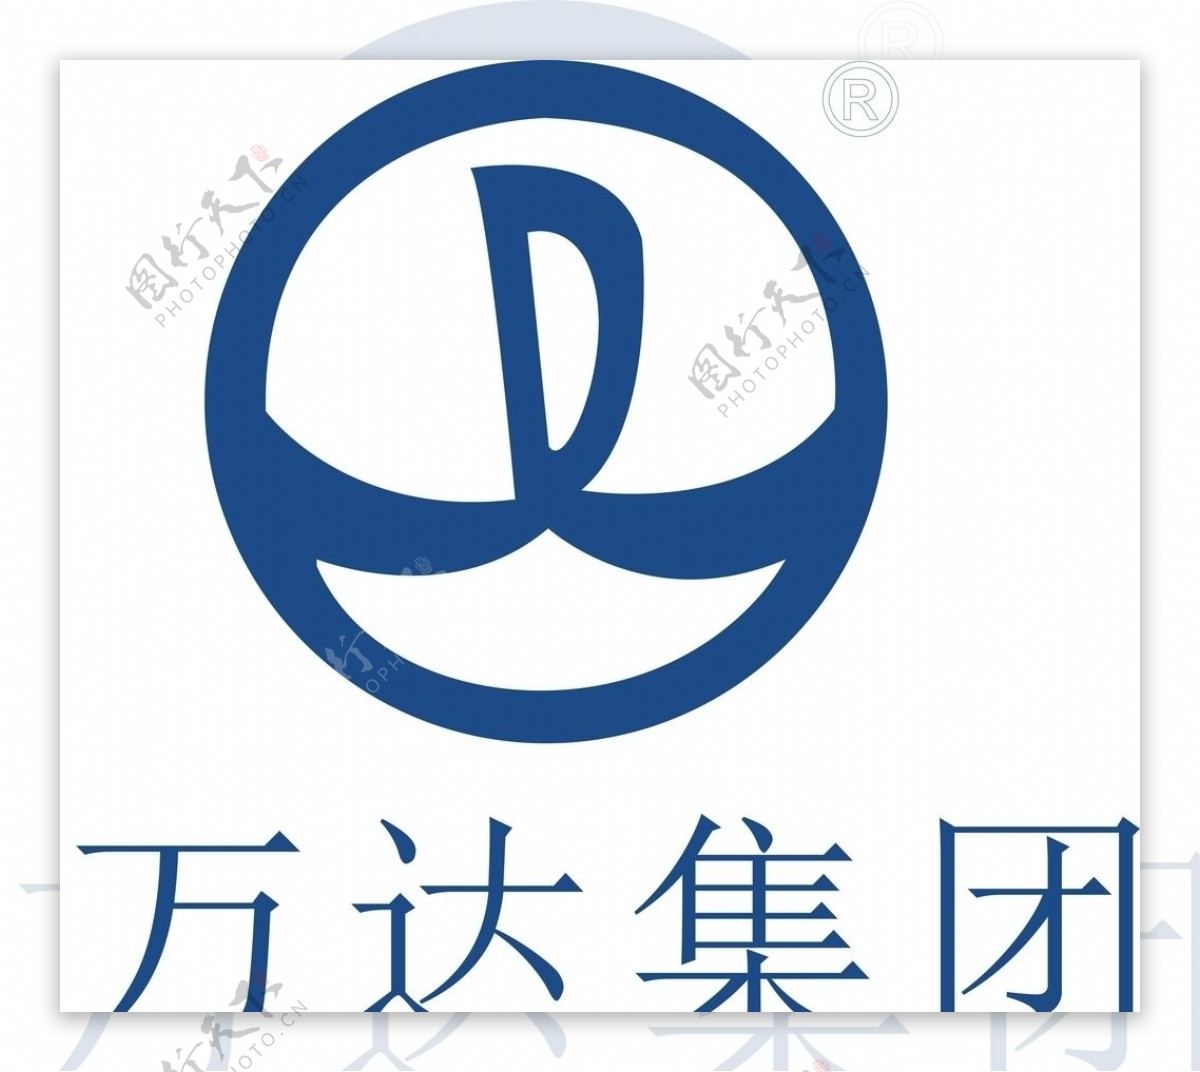 万达集团logo